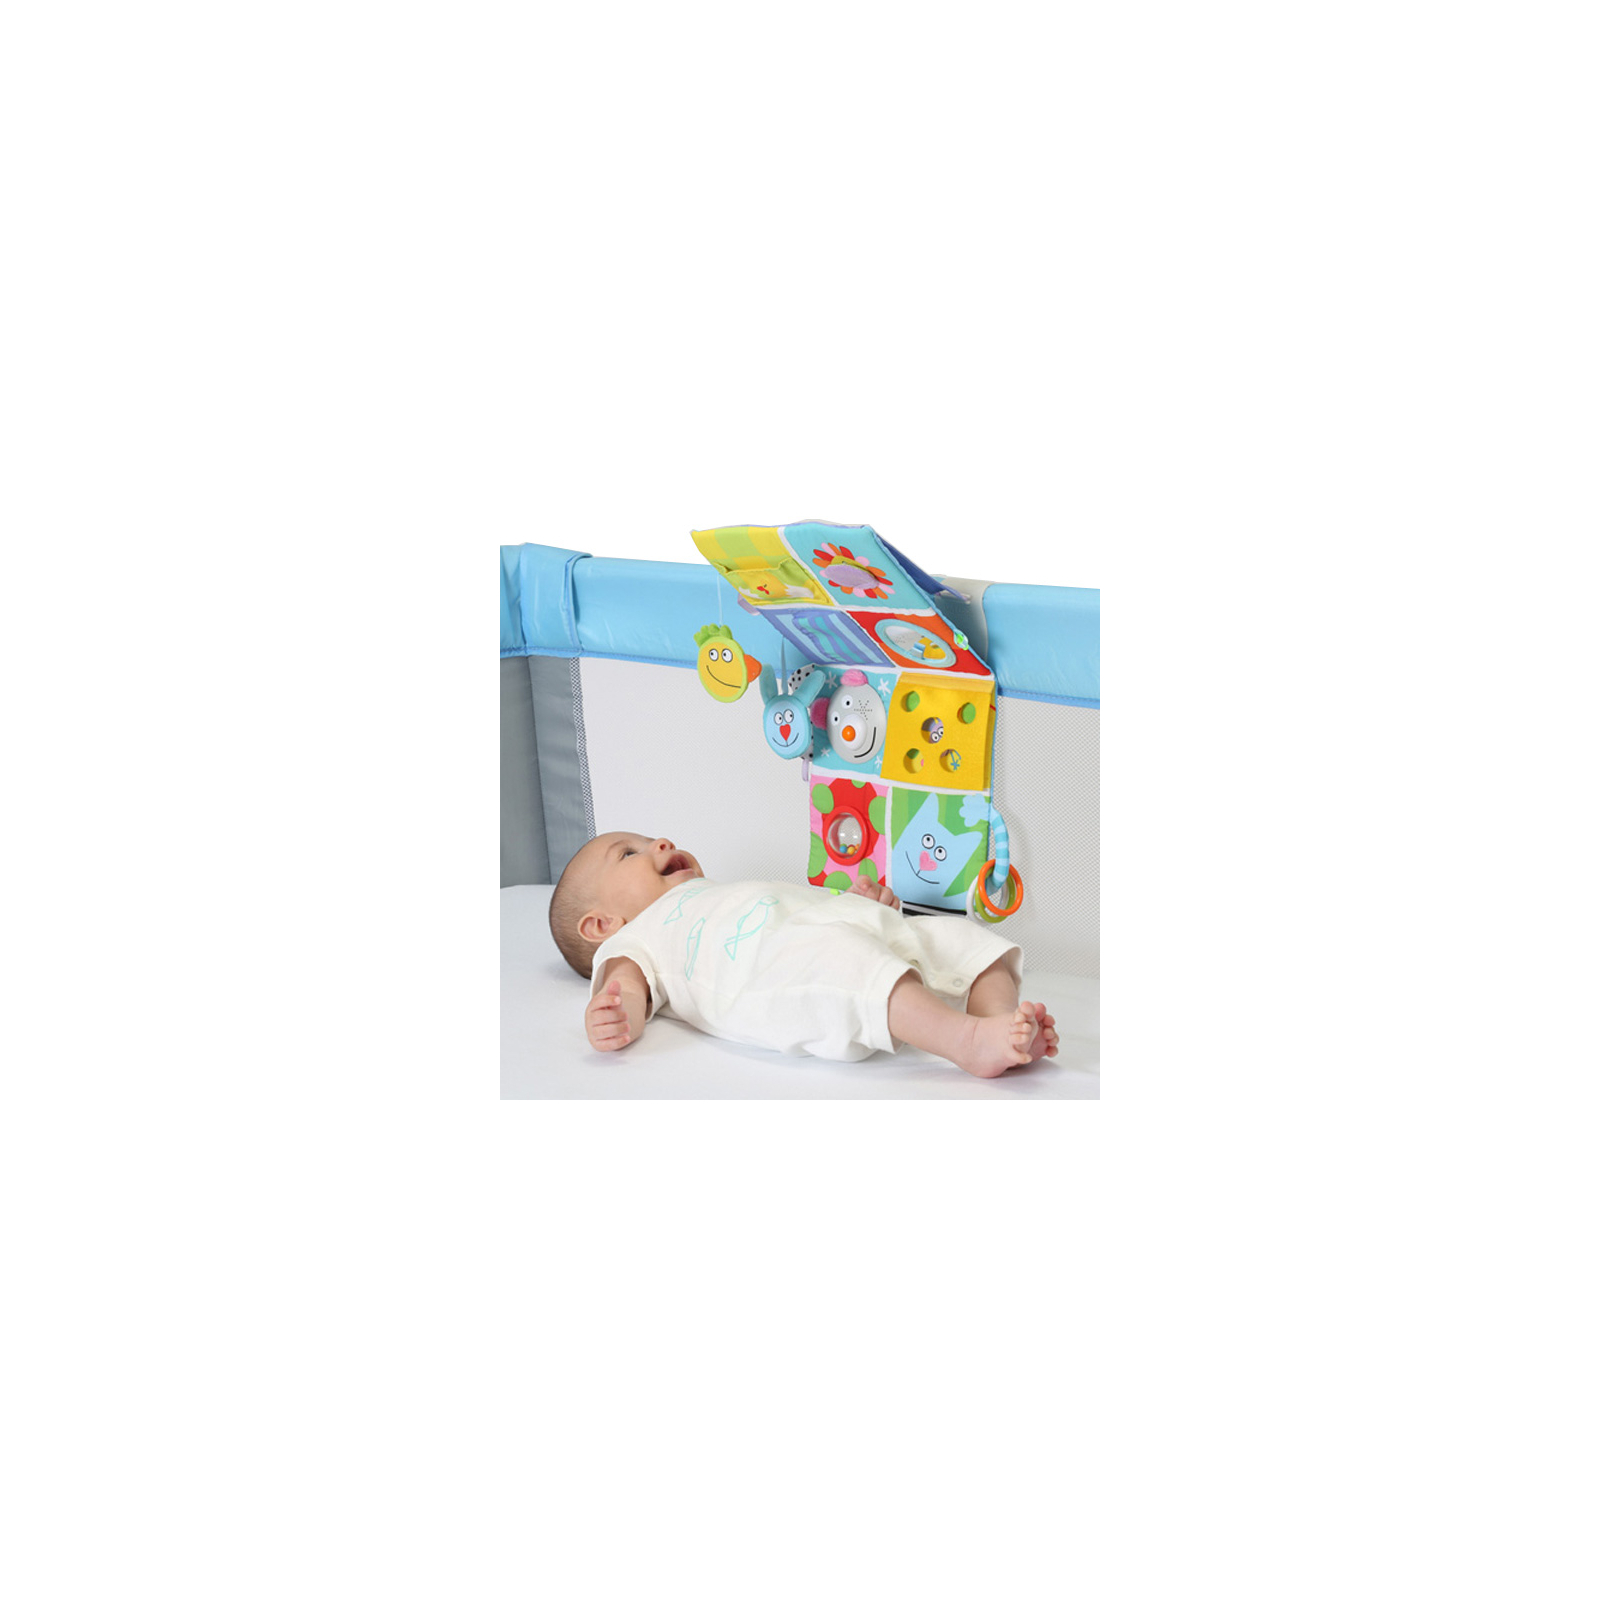 Розвиваюча іграшка Taf Toys Веселые друзья (звук, свет), для кроватки (11655) зображення 3